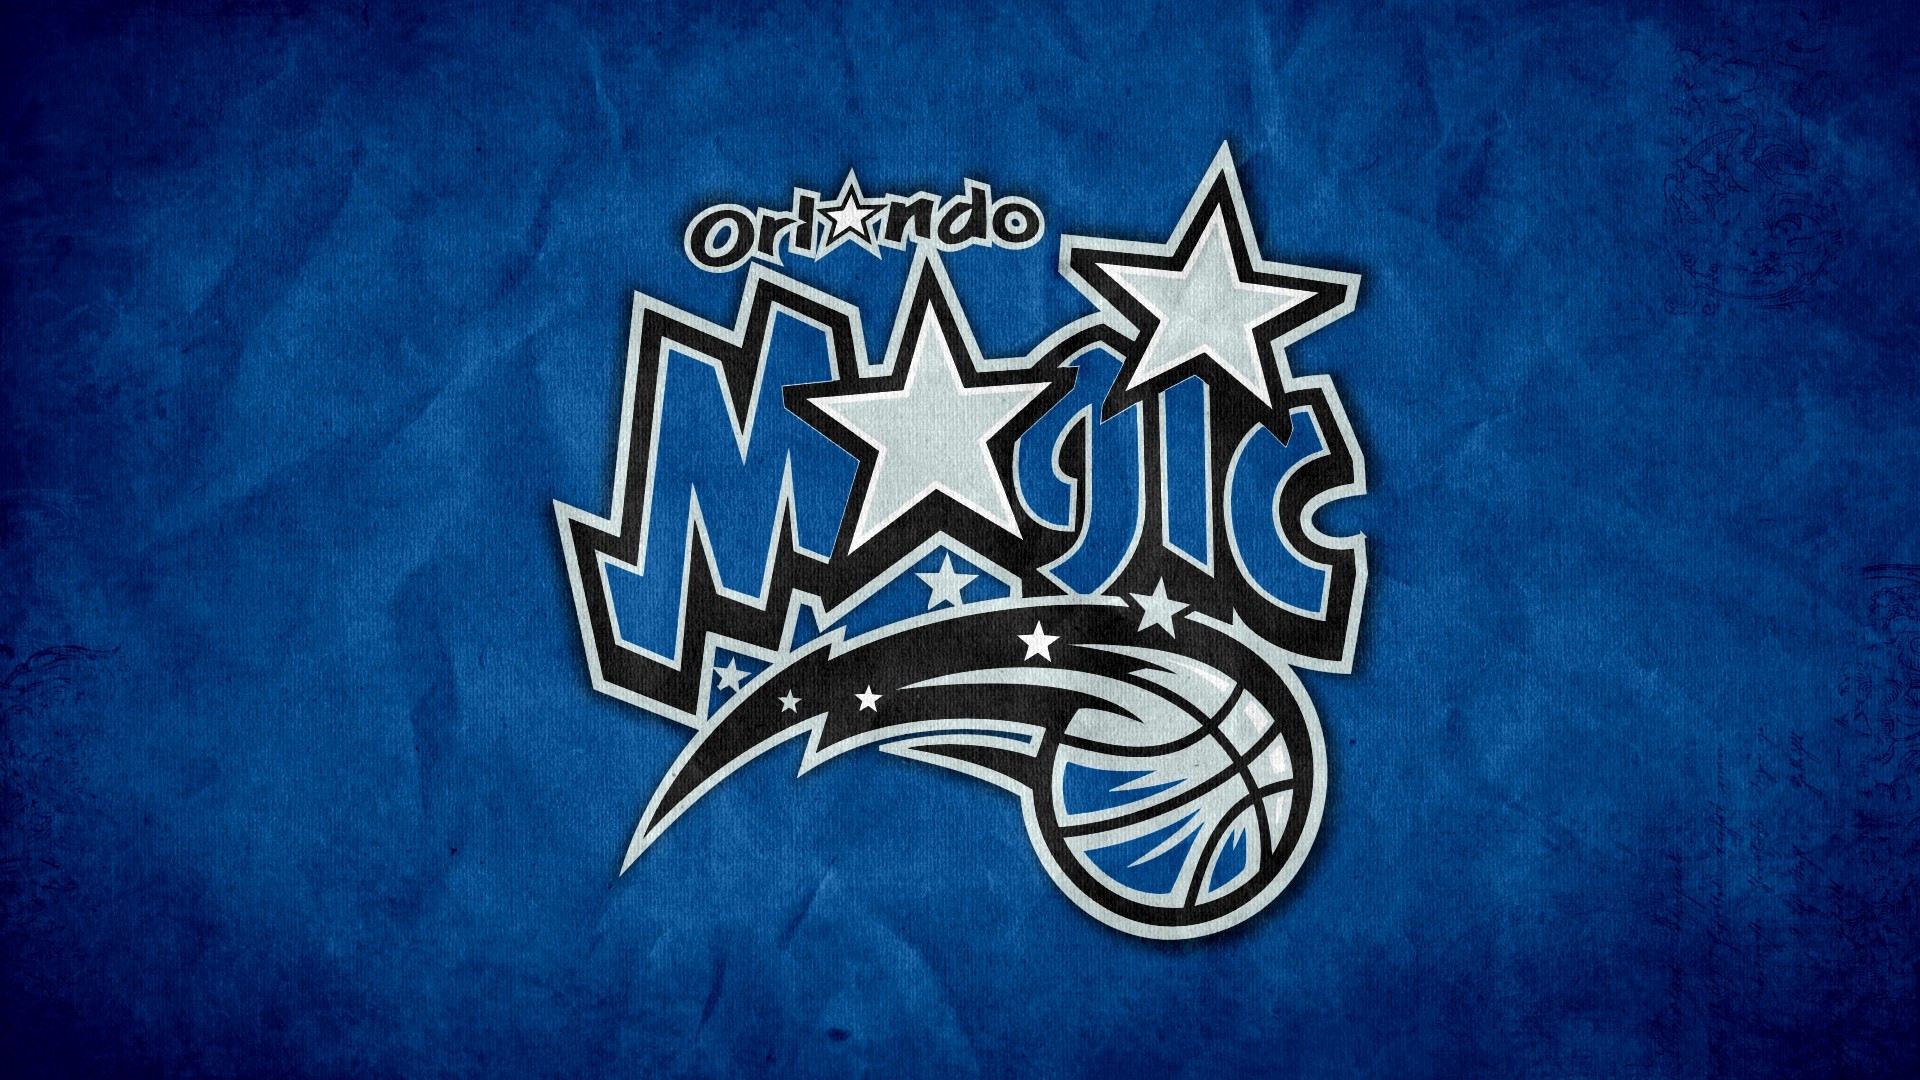 ORLANDO MAGIC nba basketball 13 wallpaper background